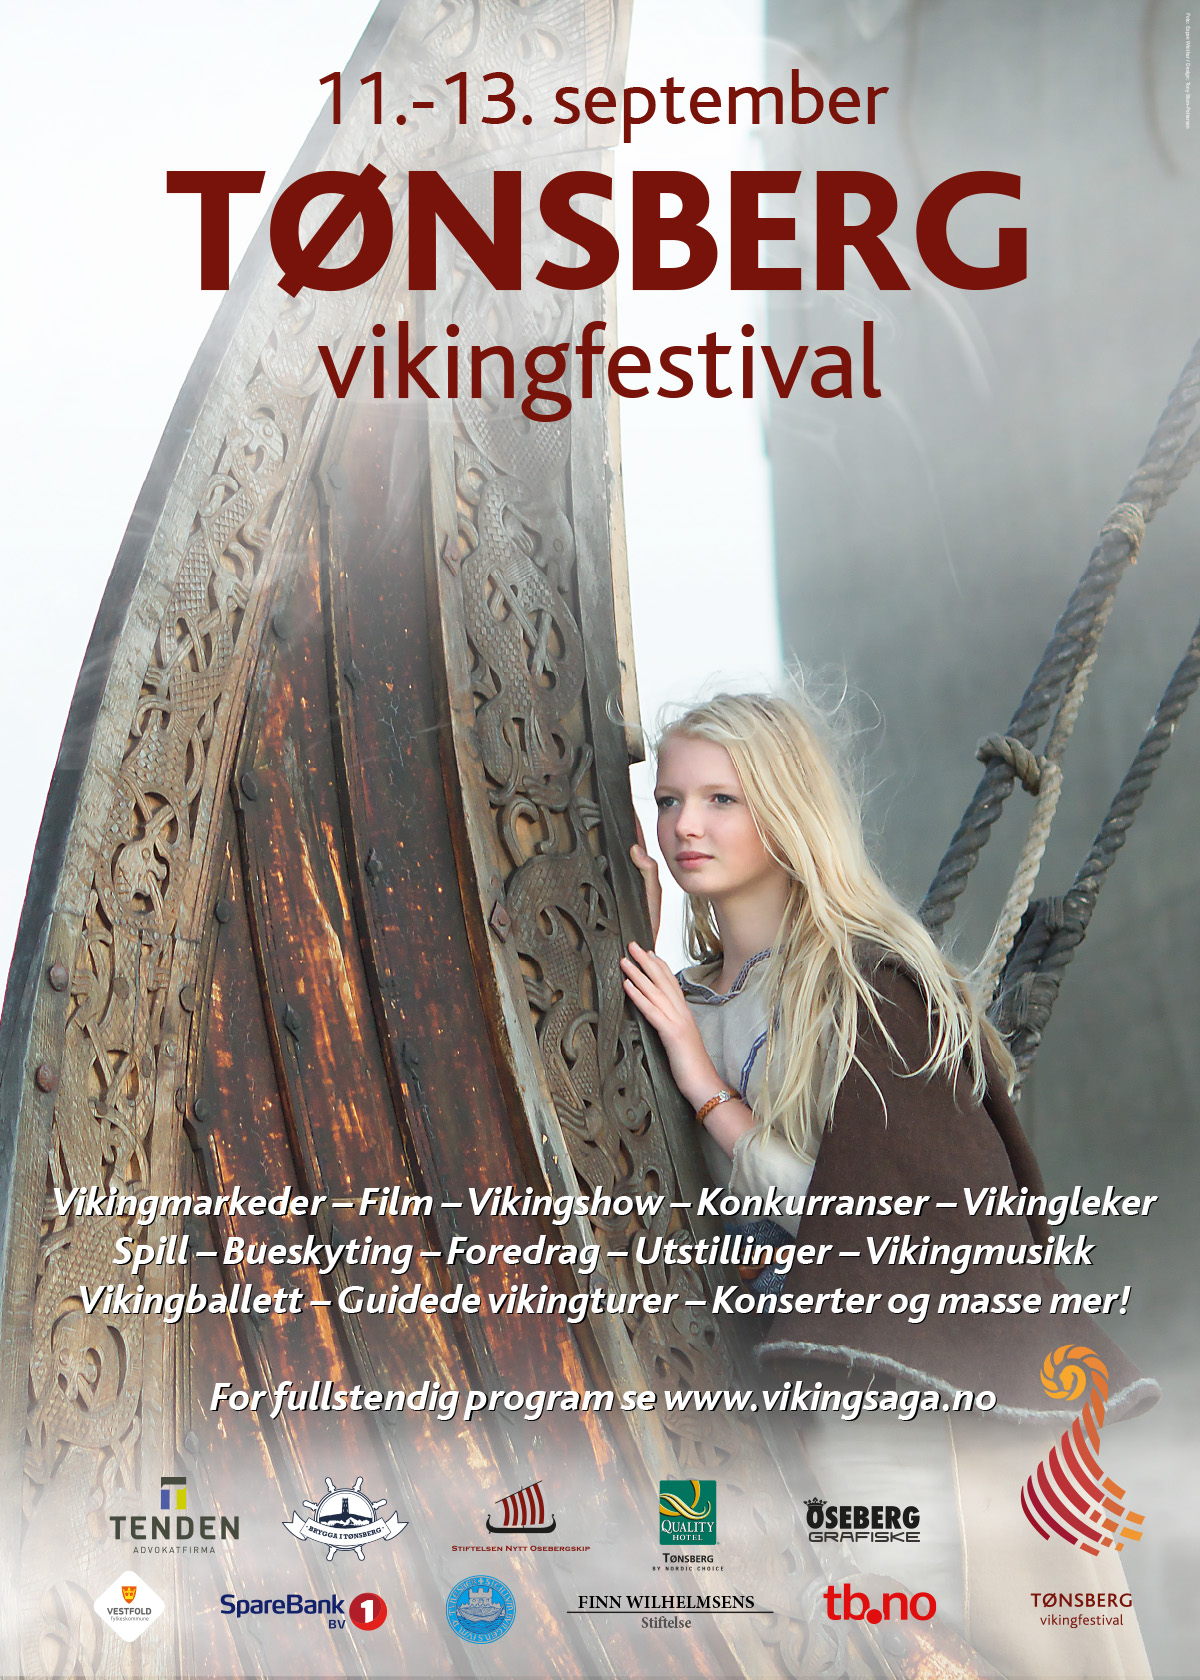 Tønsberg Vikingfestival 2015